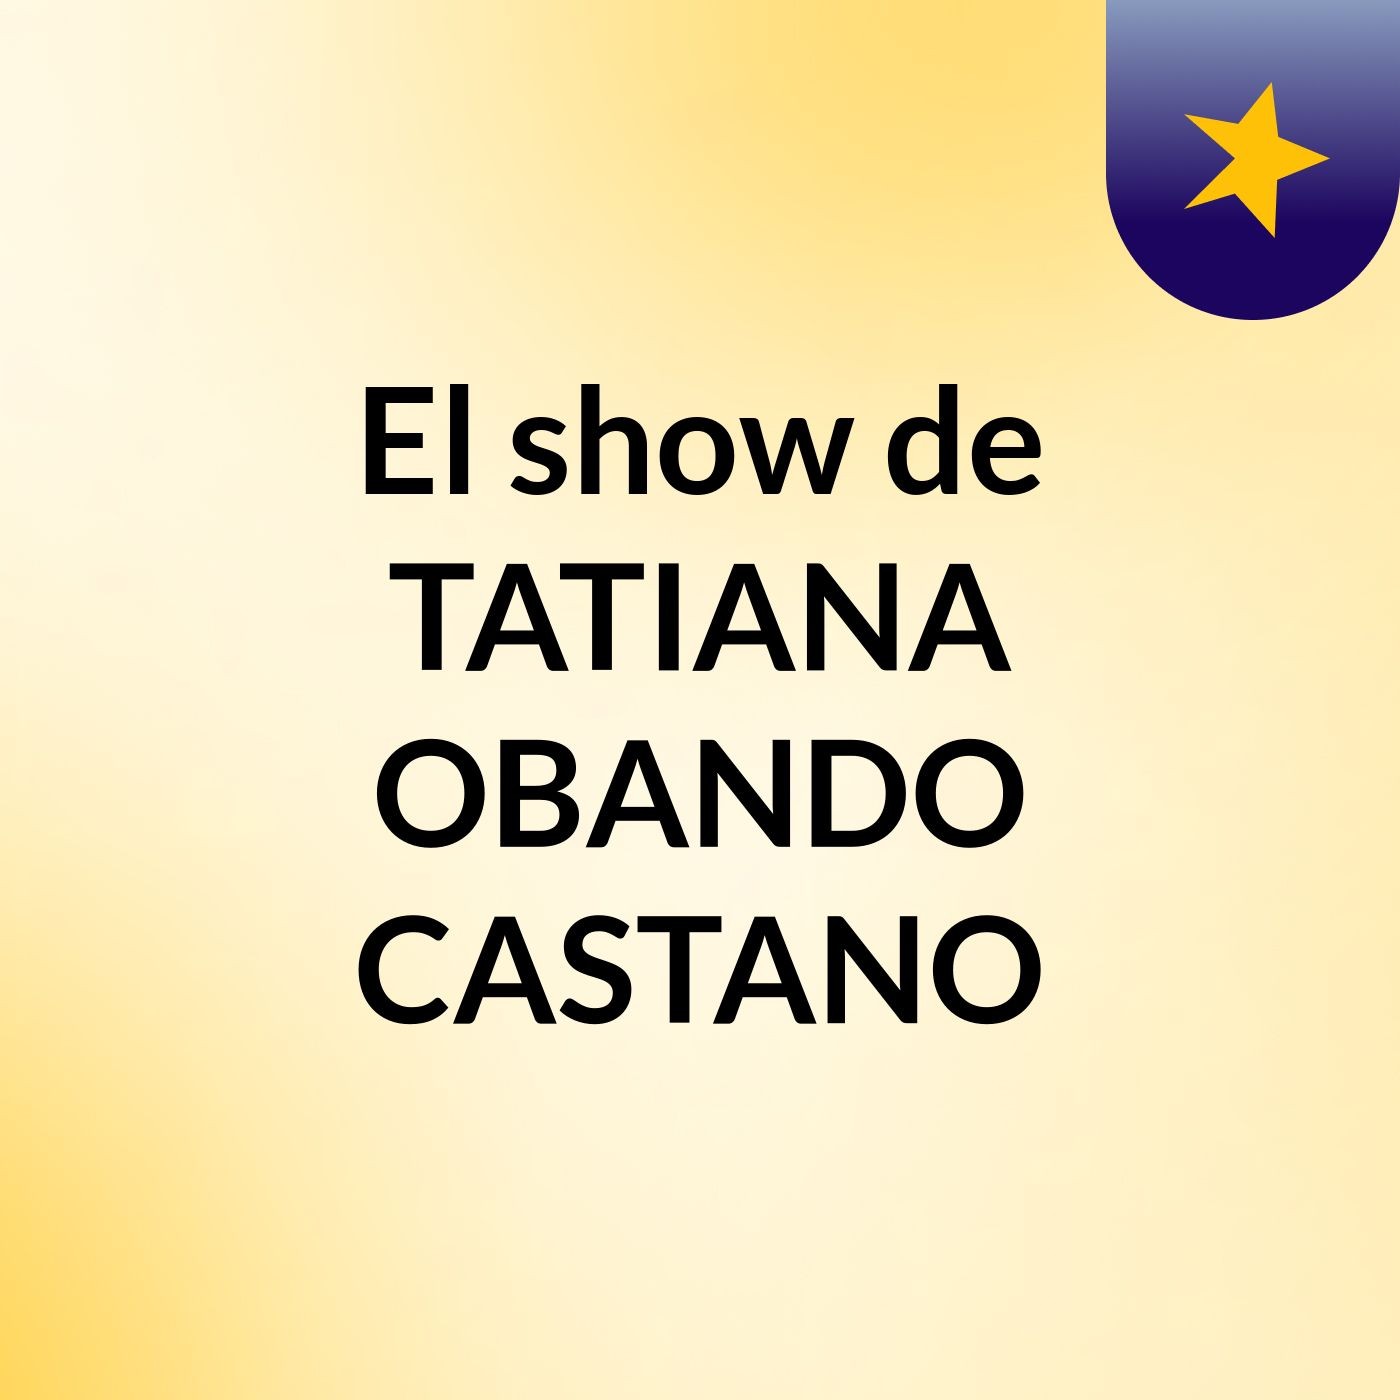 El show de TATIANA OBANDO CASTANO